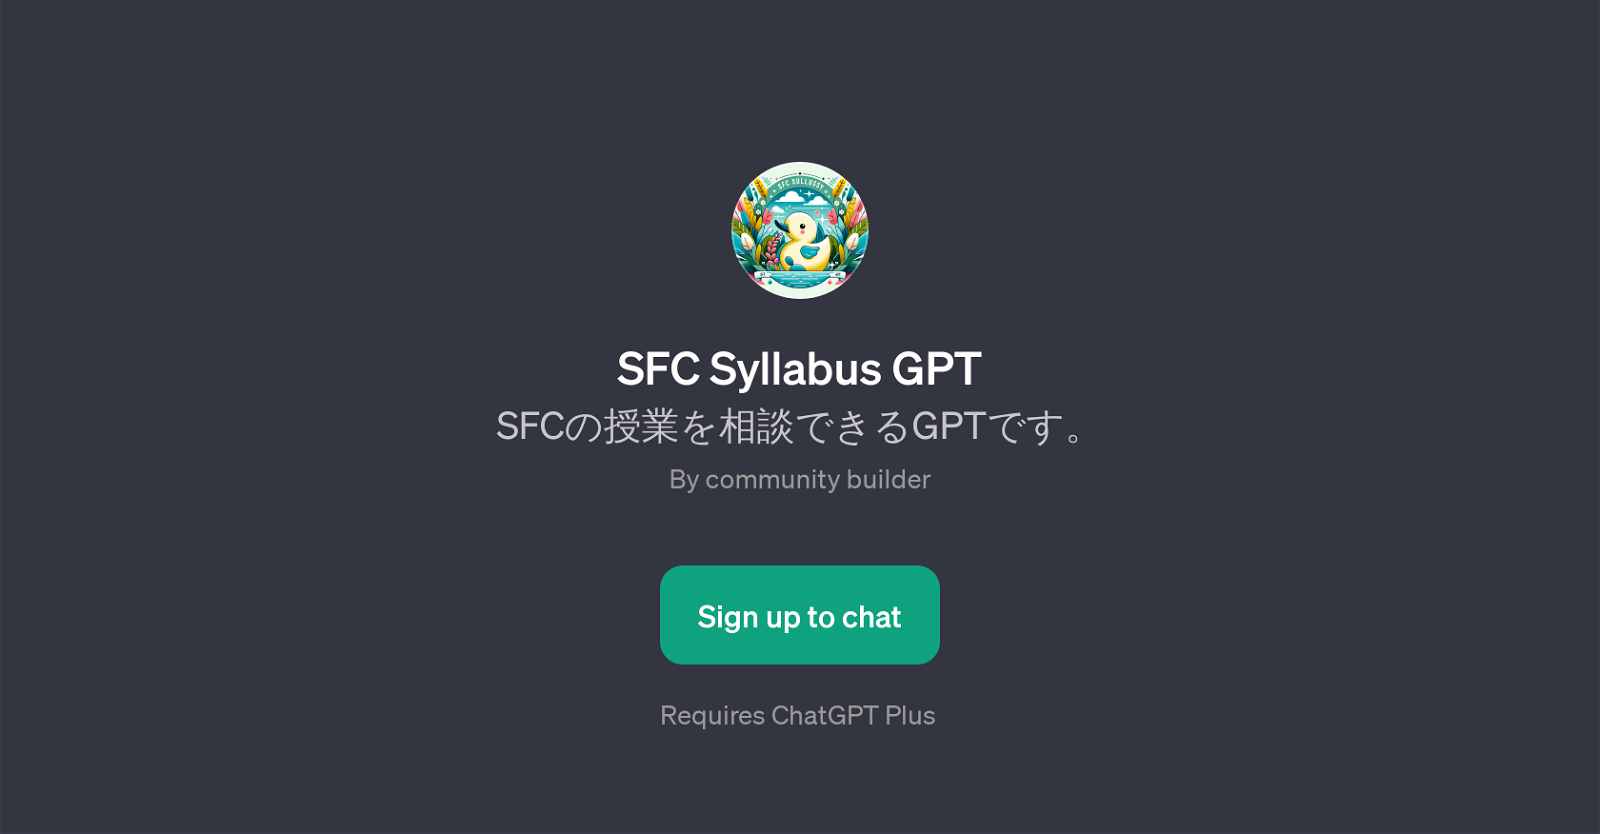 SFC Syllabus GPT website